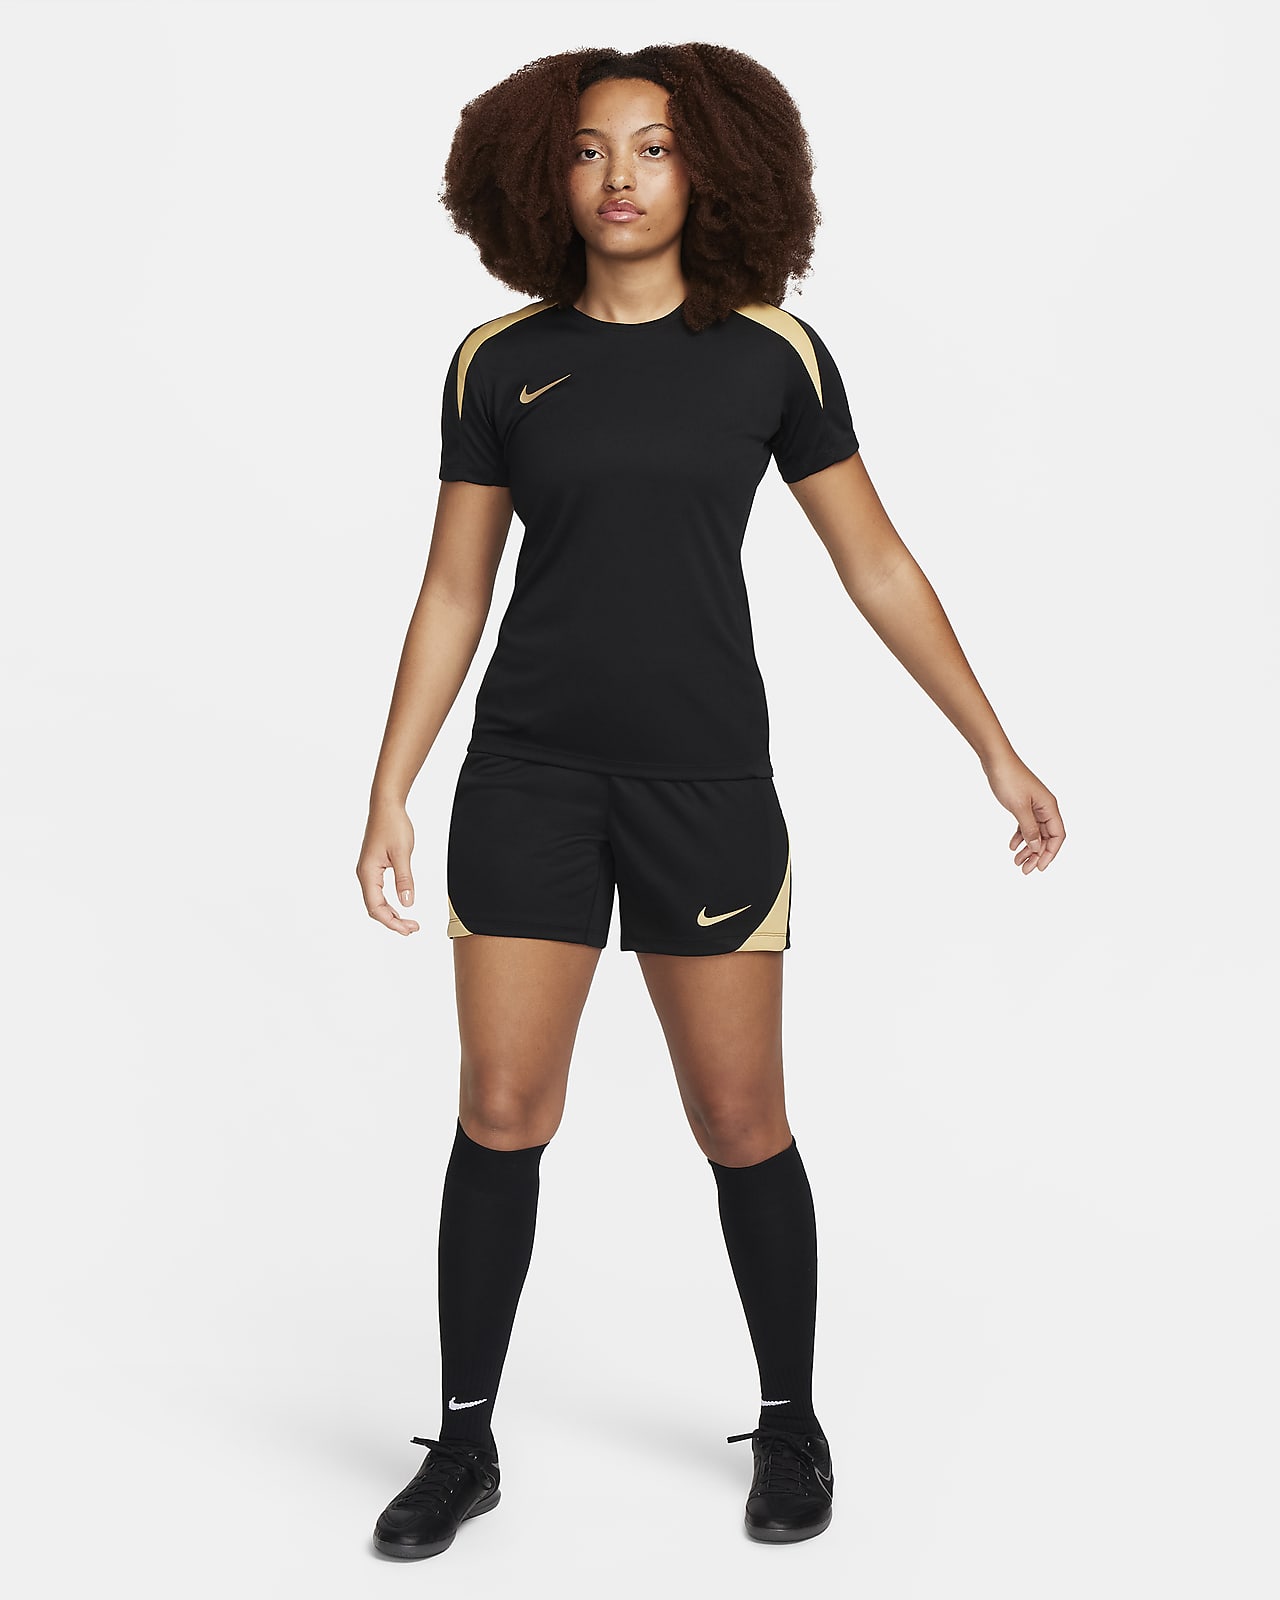 U.S. 2022/23 Stadium Home Women's Nike Dri-FIT Soccer Shorts